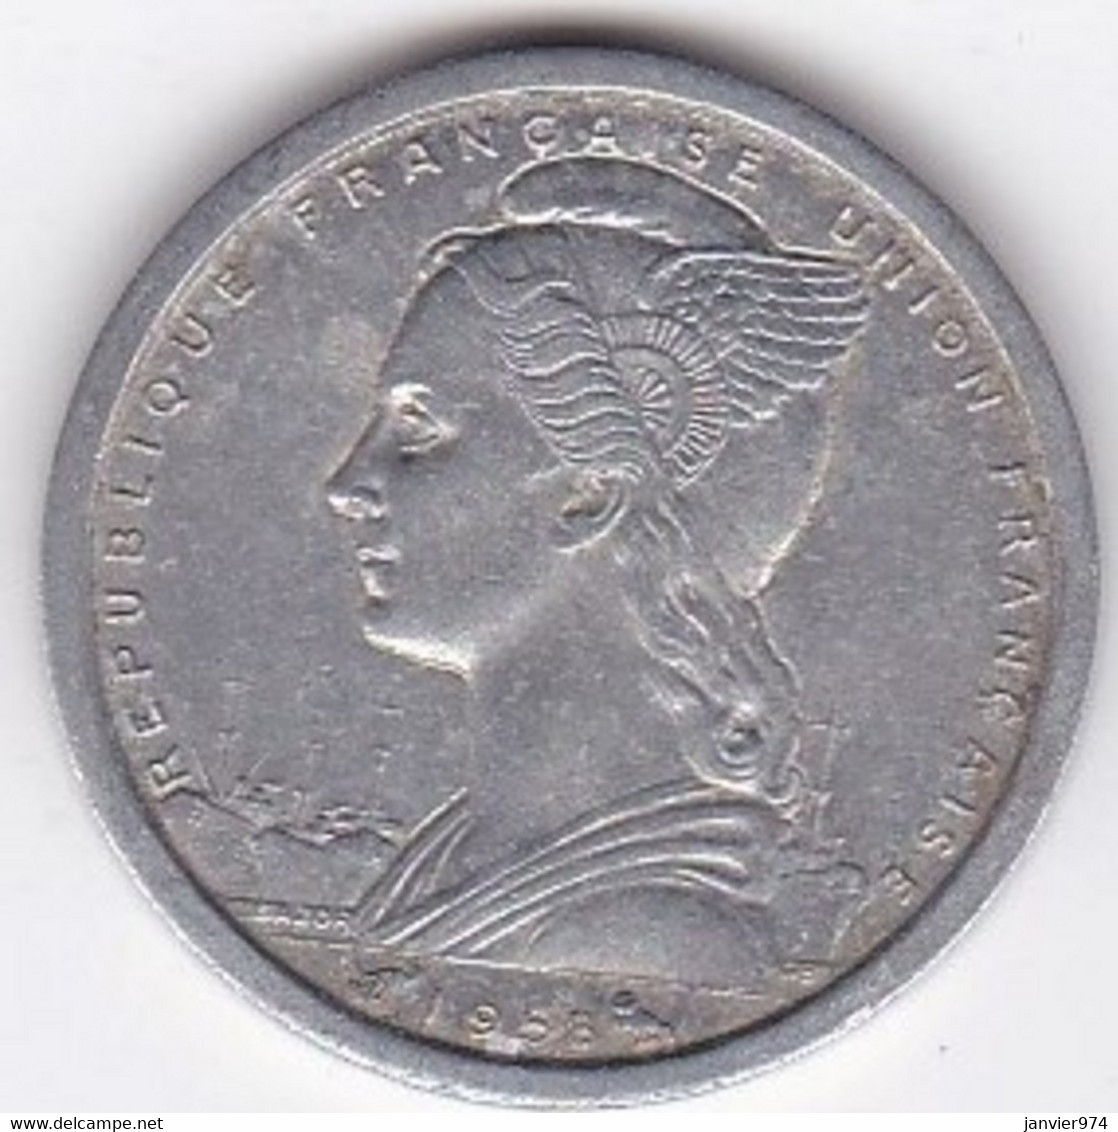 Madagascar Union Française , 1 Franc 1958 Chouette , En Aluminium , Lec# 99 - Madagascar